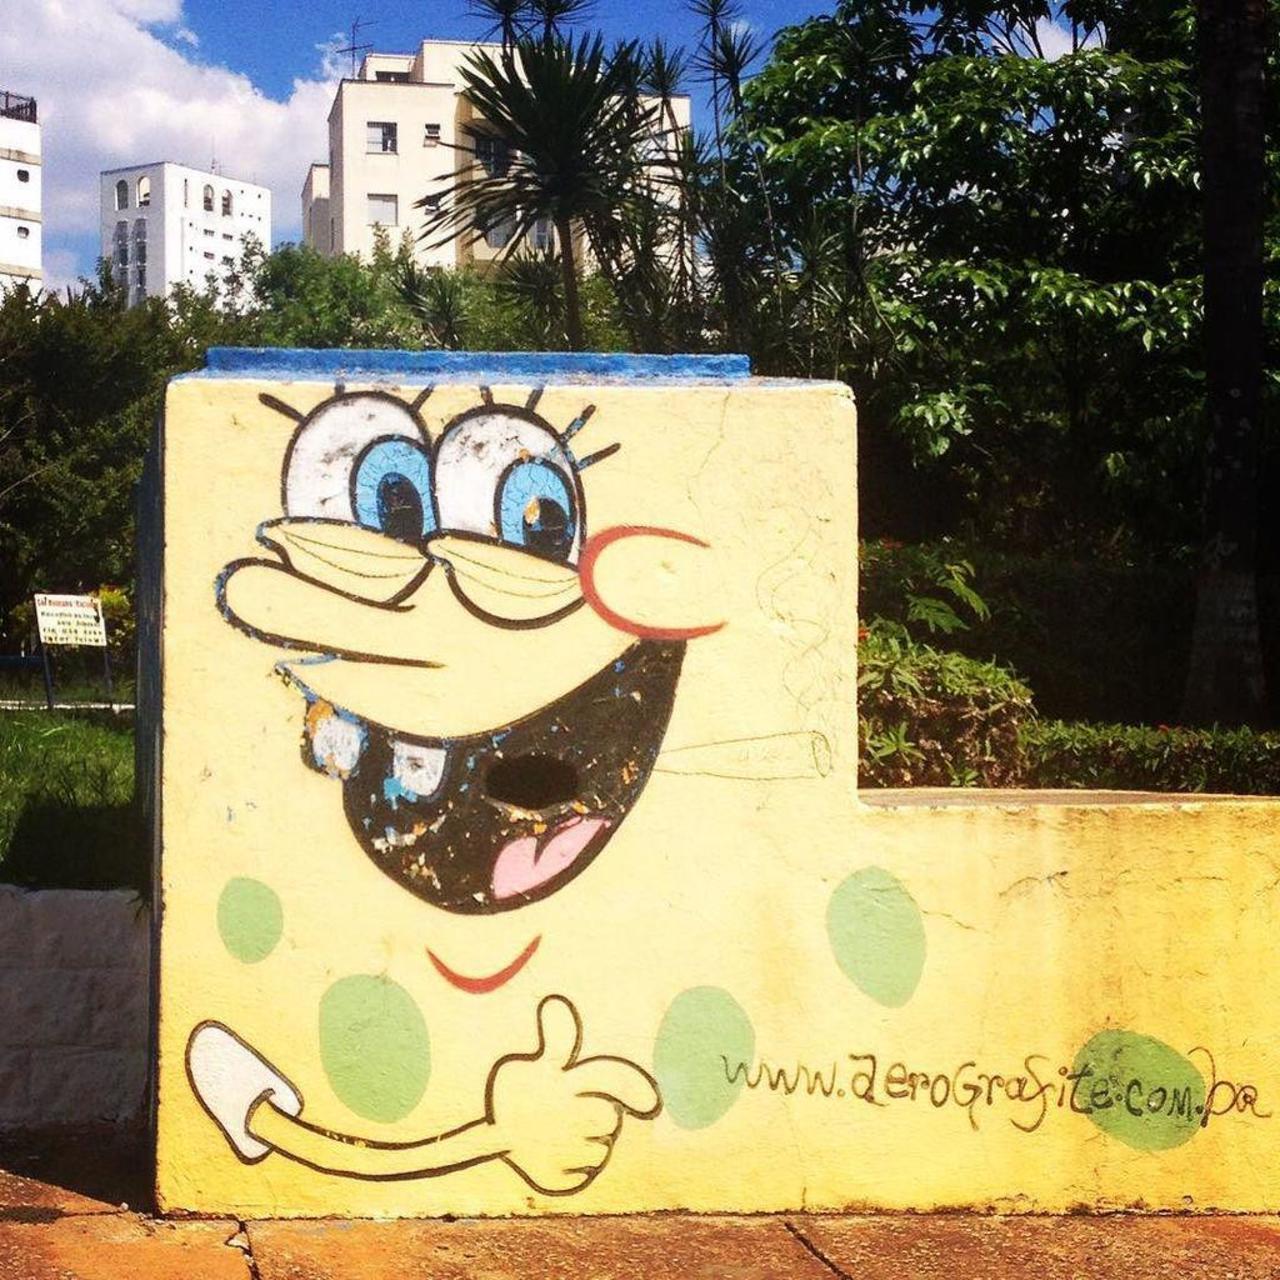 #streetart #spongebob #graffiti #grafite #ZL #artederua #bobesponja #spongebob http://t.co/0F4YEIDh4C